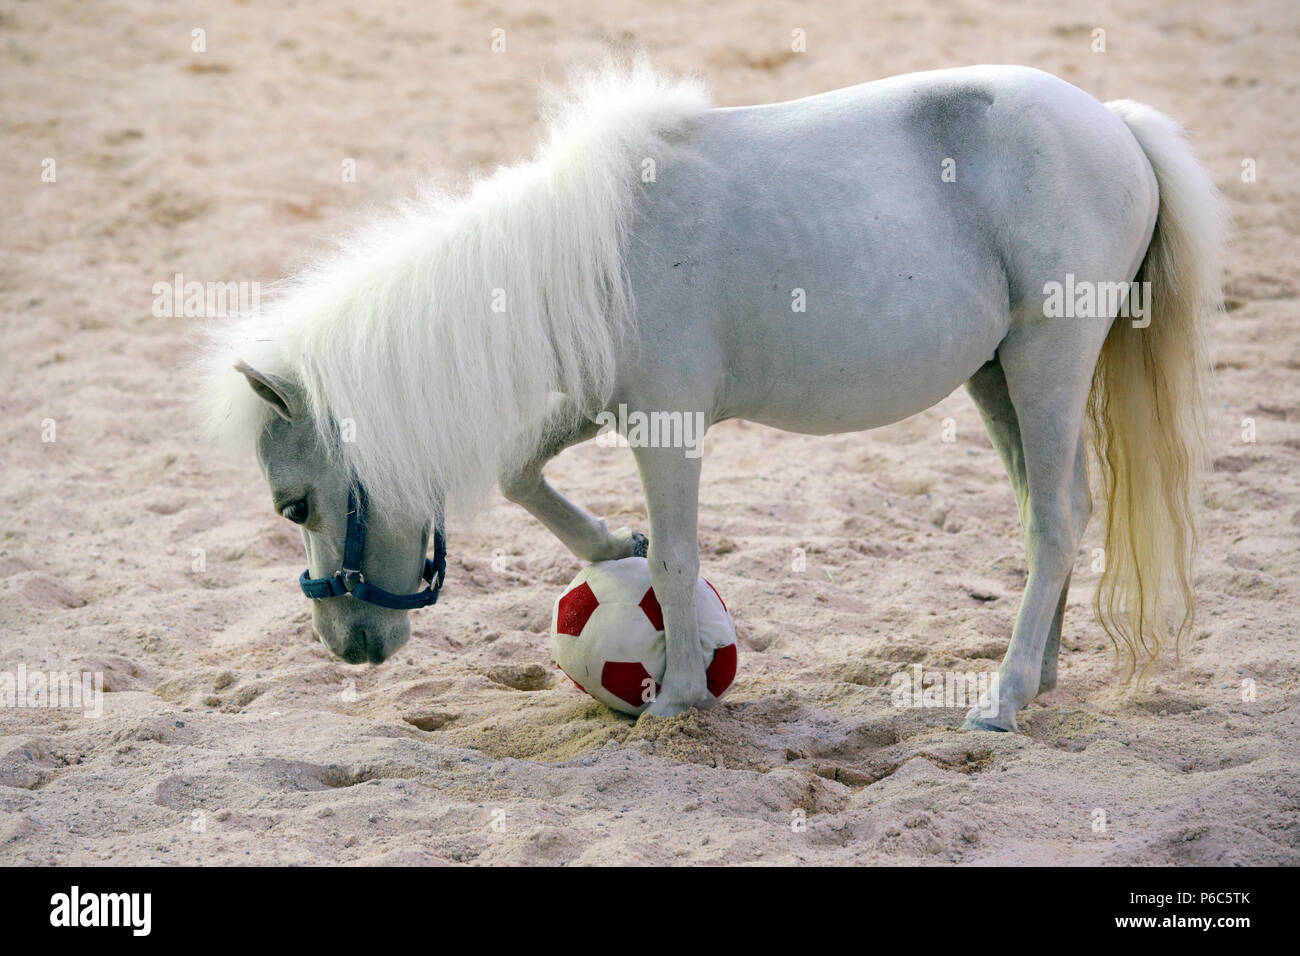 Doha, mini-Shetland pony plays with a soft football Stock Photo